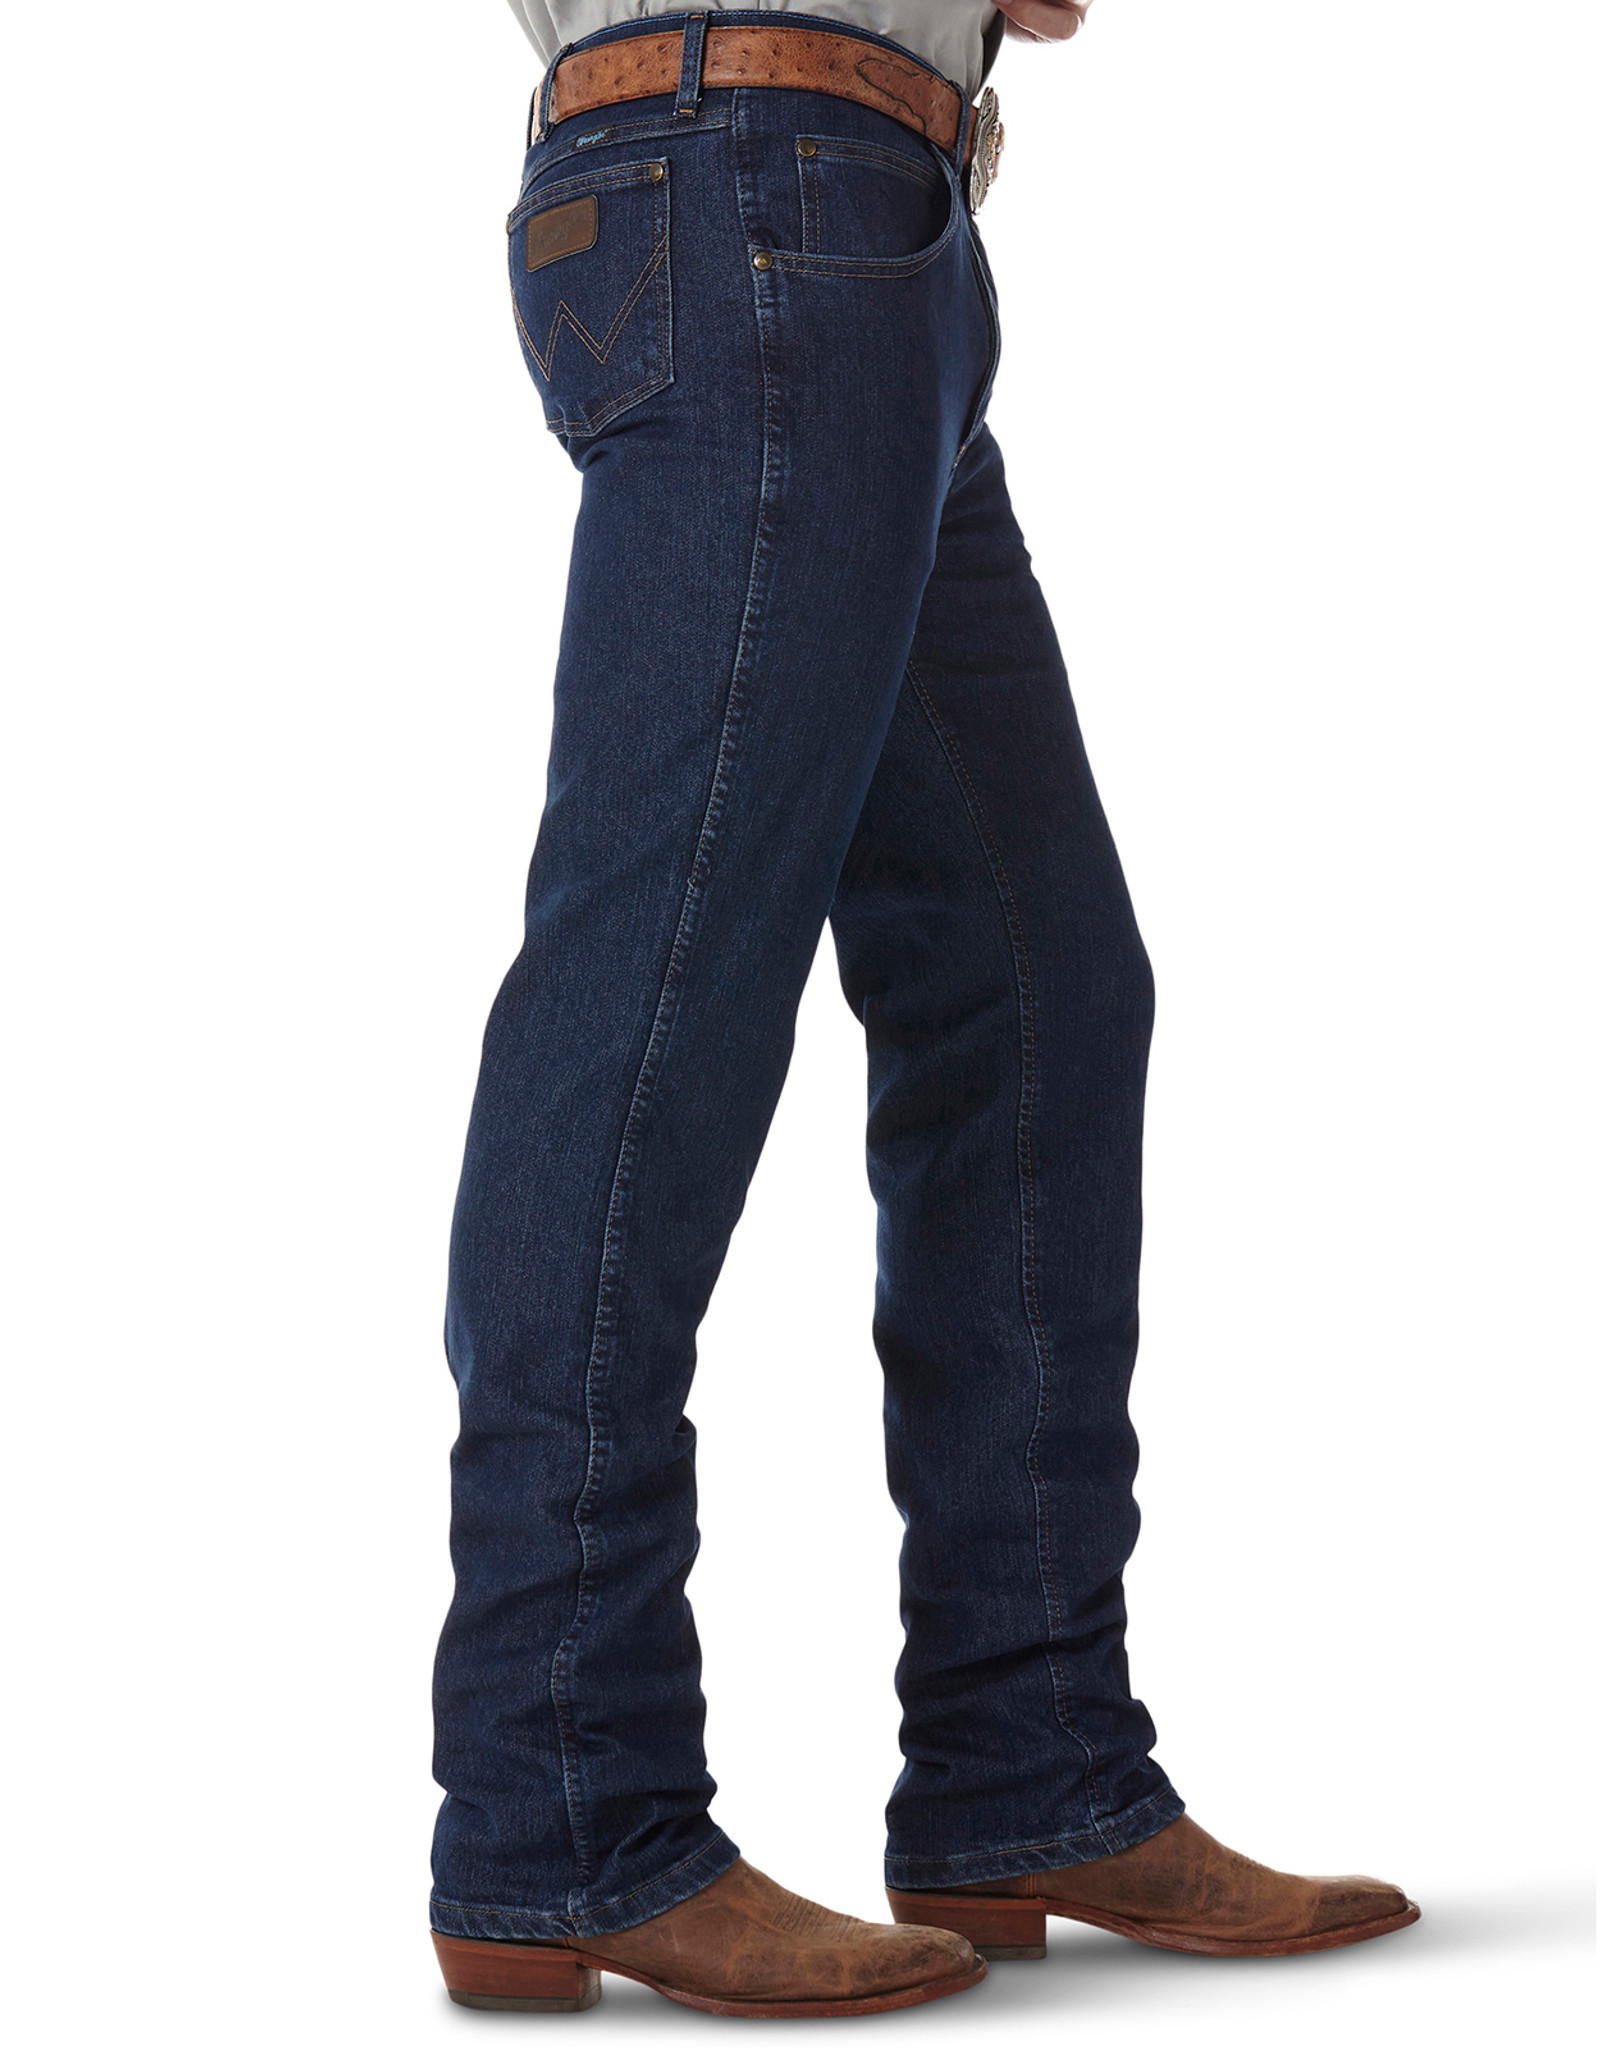 Wrangler Men's 36 Slim Advanced Comfort Stretch Mid Rise Slim Fit Boot Cut Jeans - Midnight Rinse